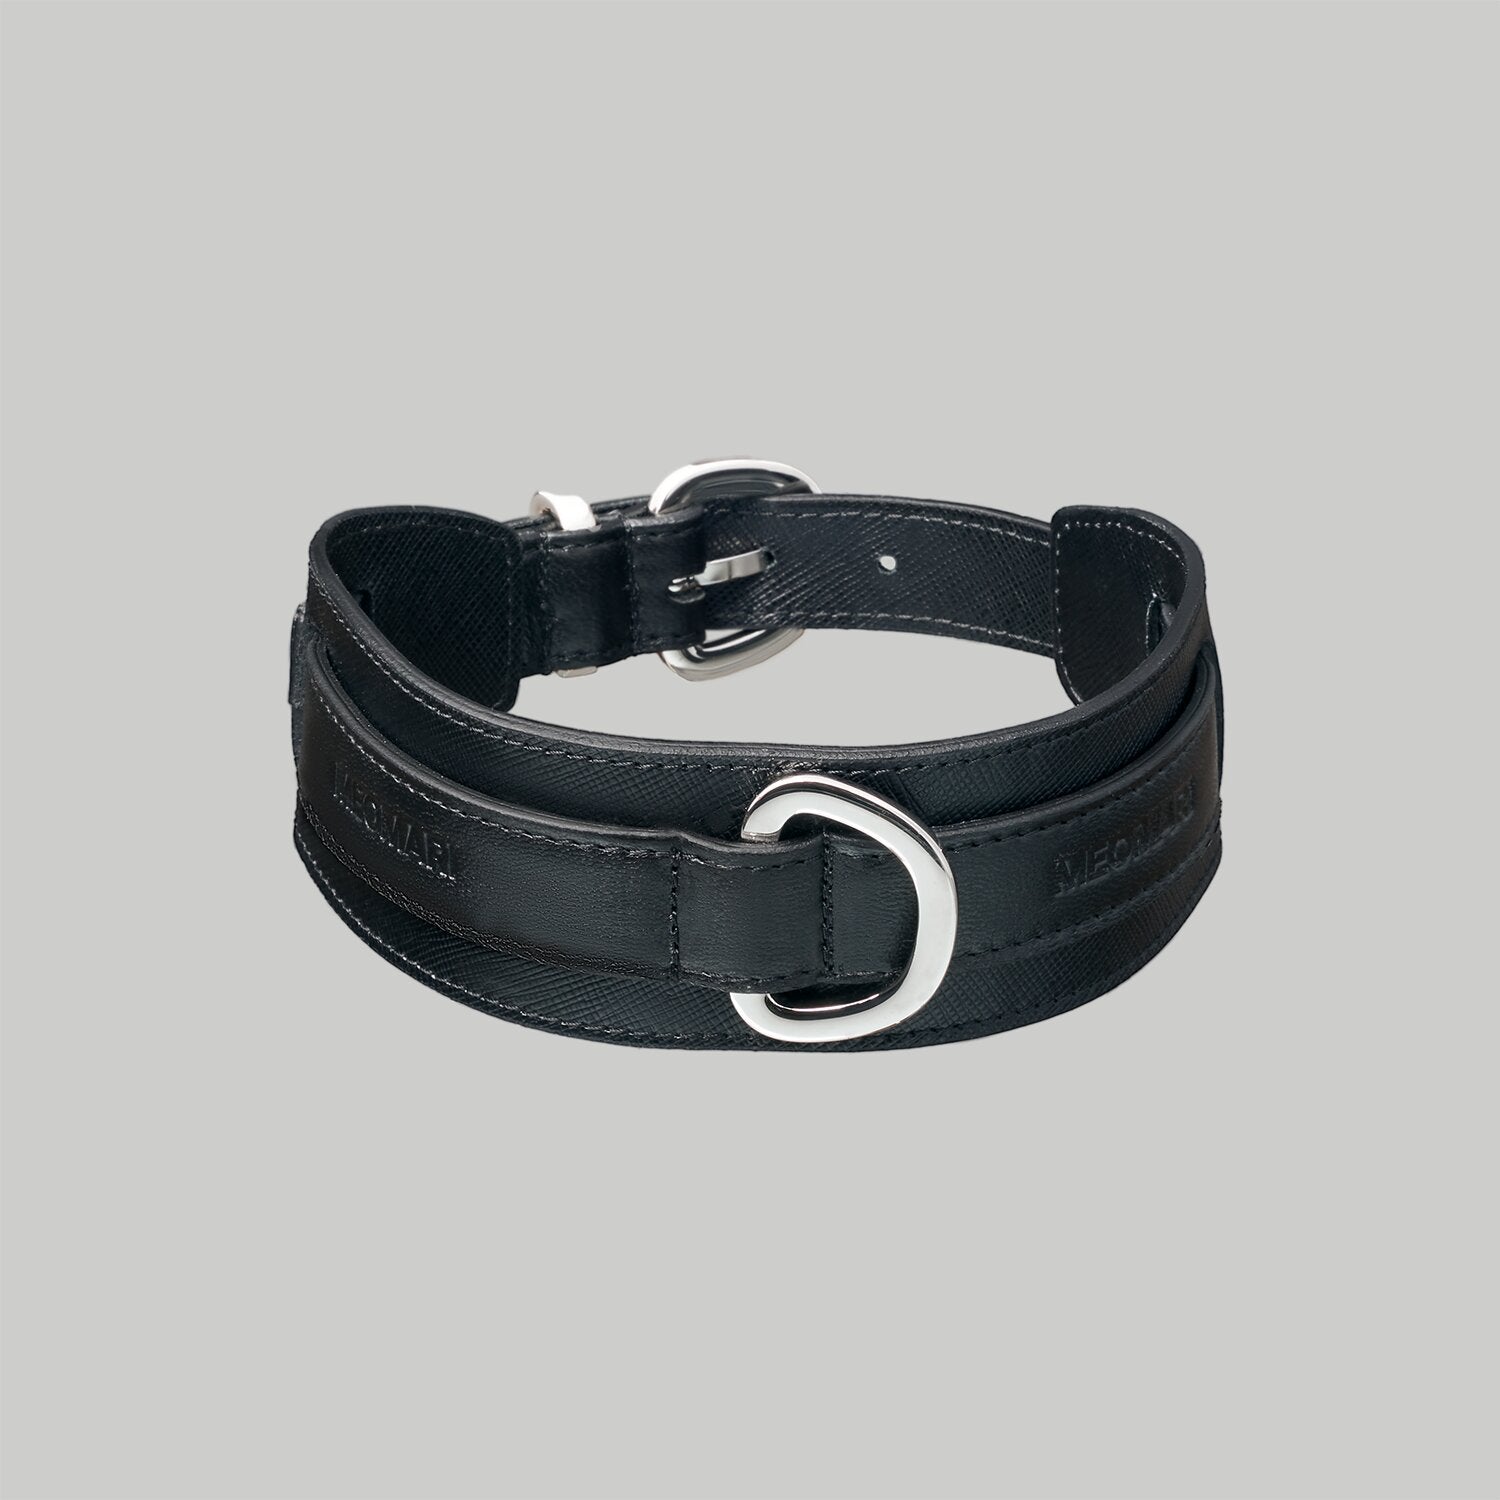 Dog collar in black Saffiano leather with Palladium